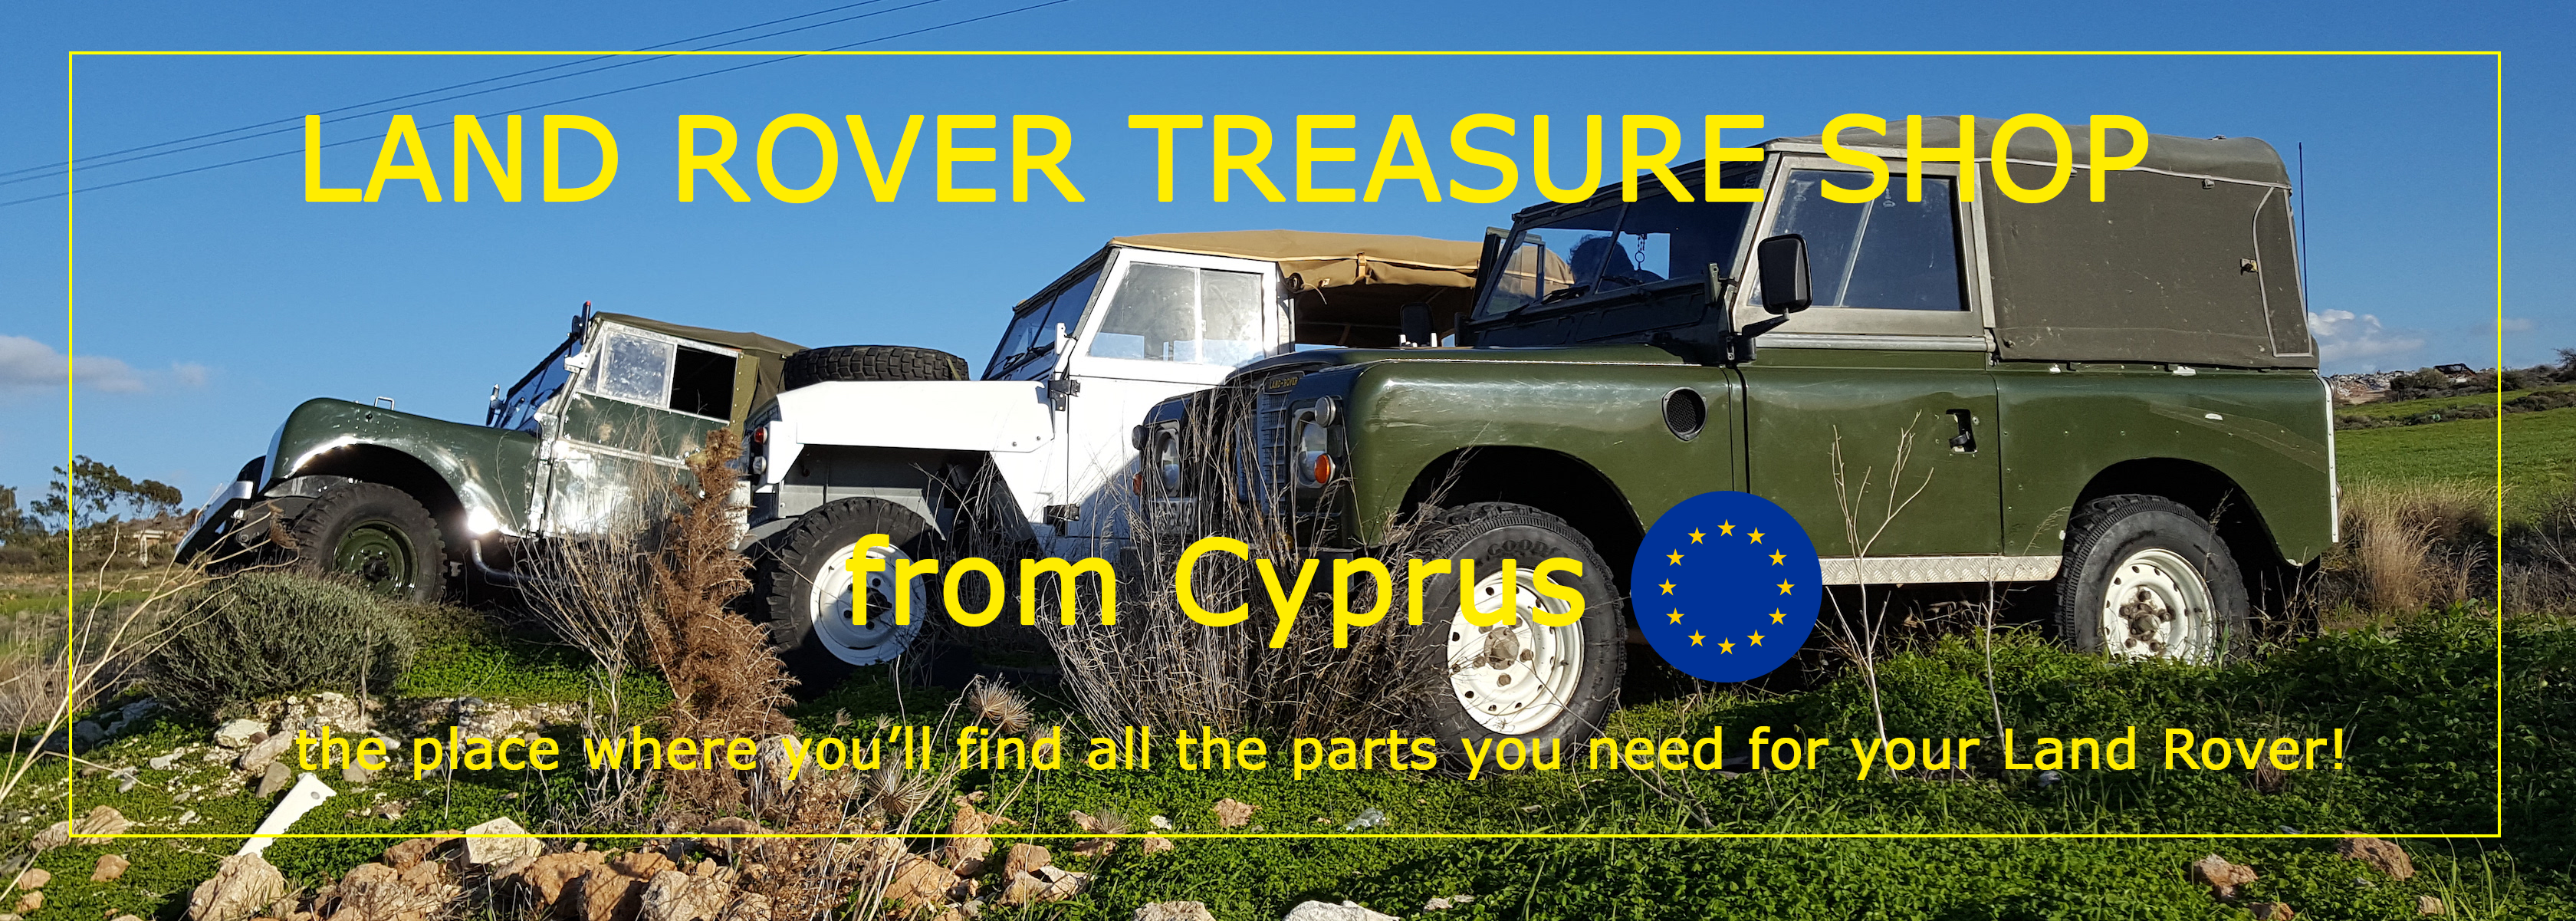 Land Rover Treasure Shop from Cyprus EU